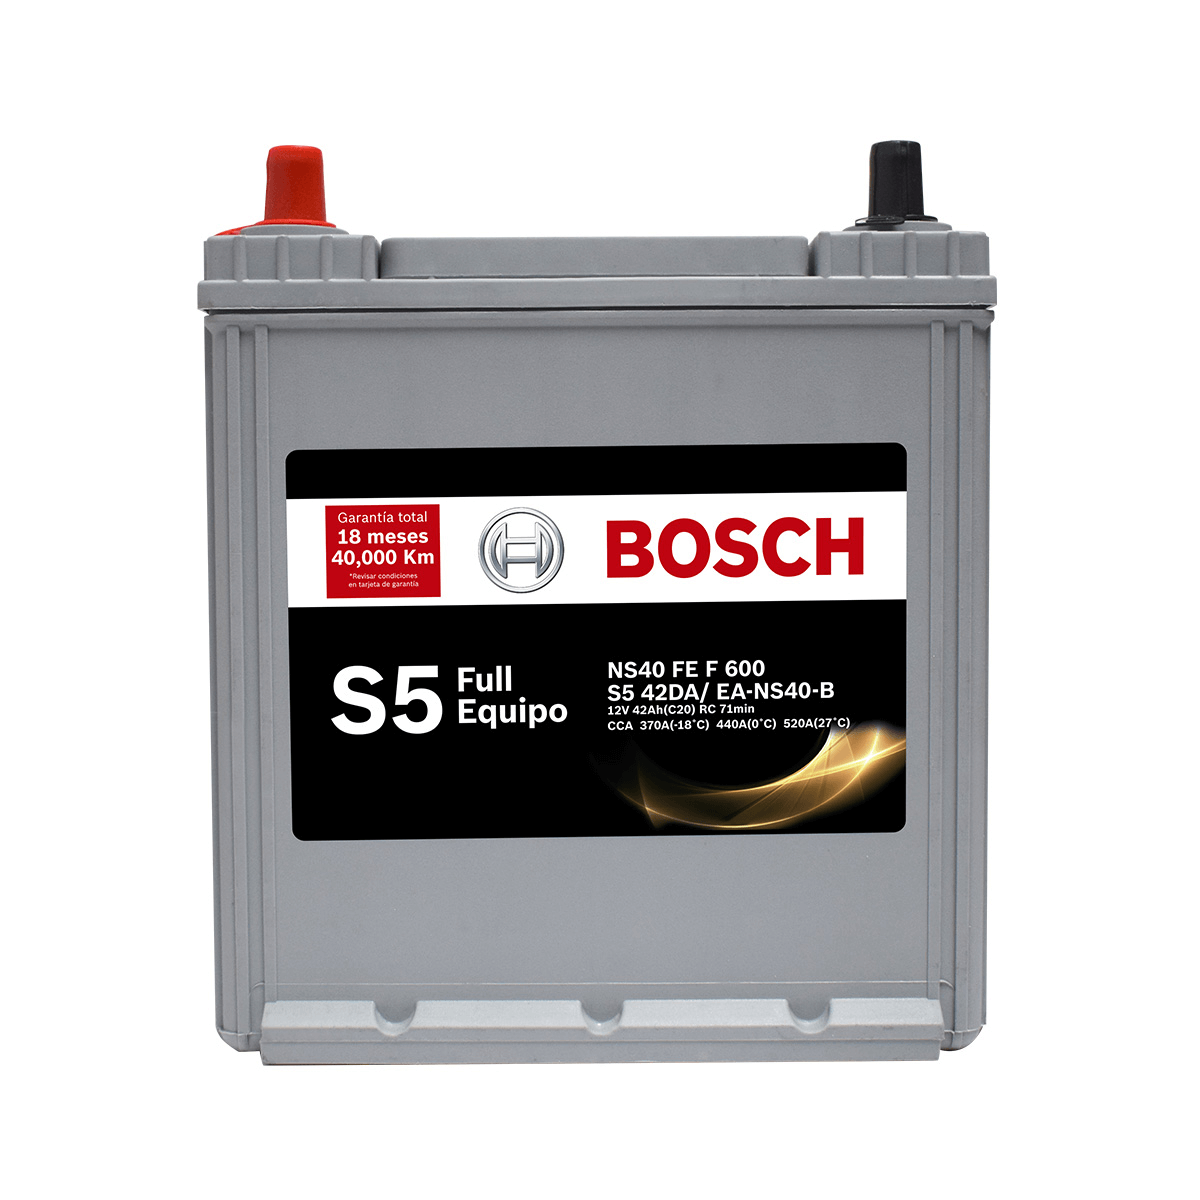 Bateria Bosch® S3 - N120 Shd (- +) Normal 138ah